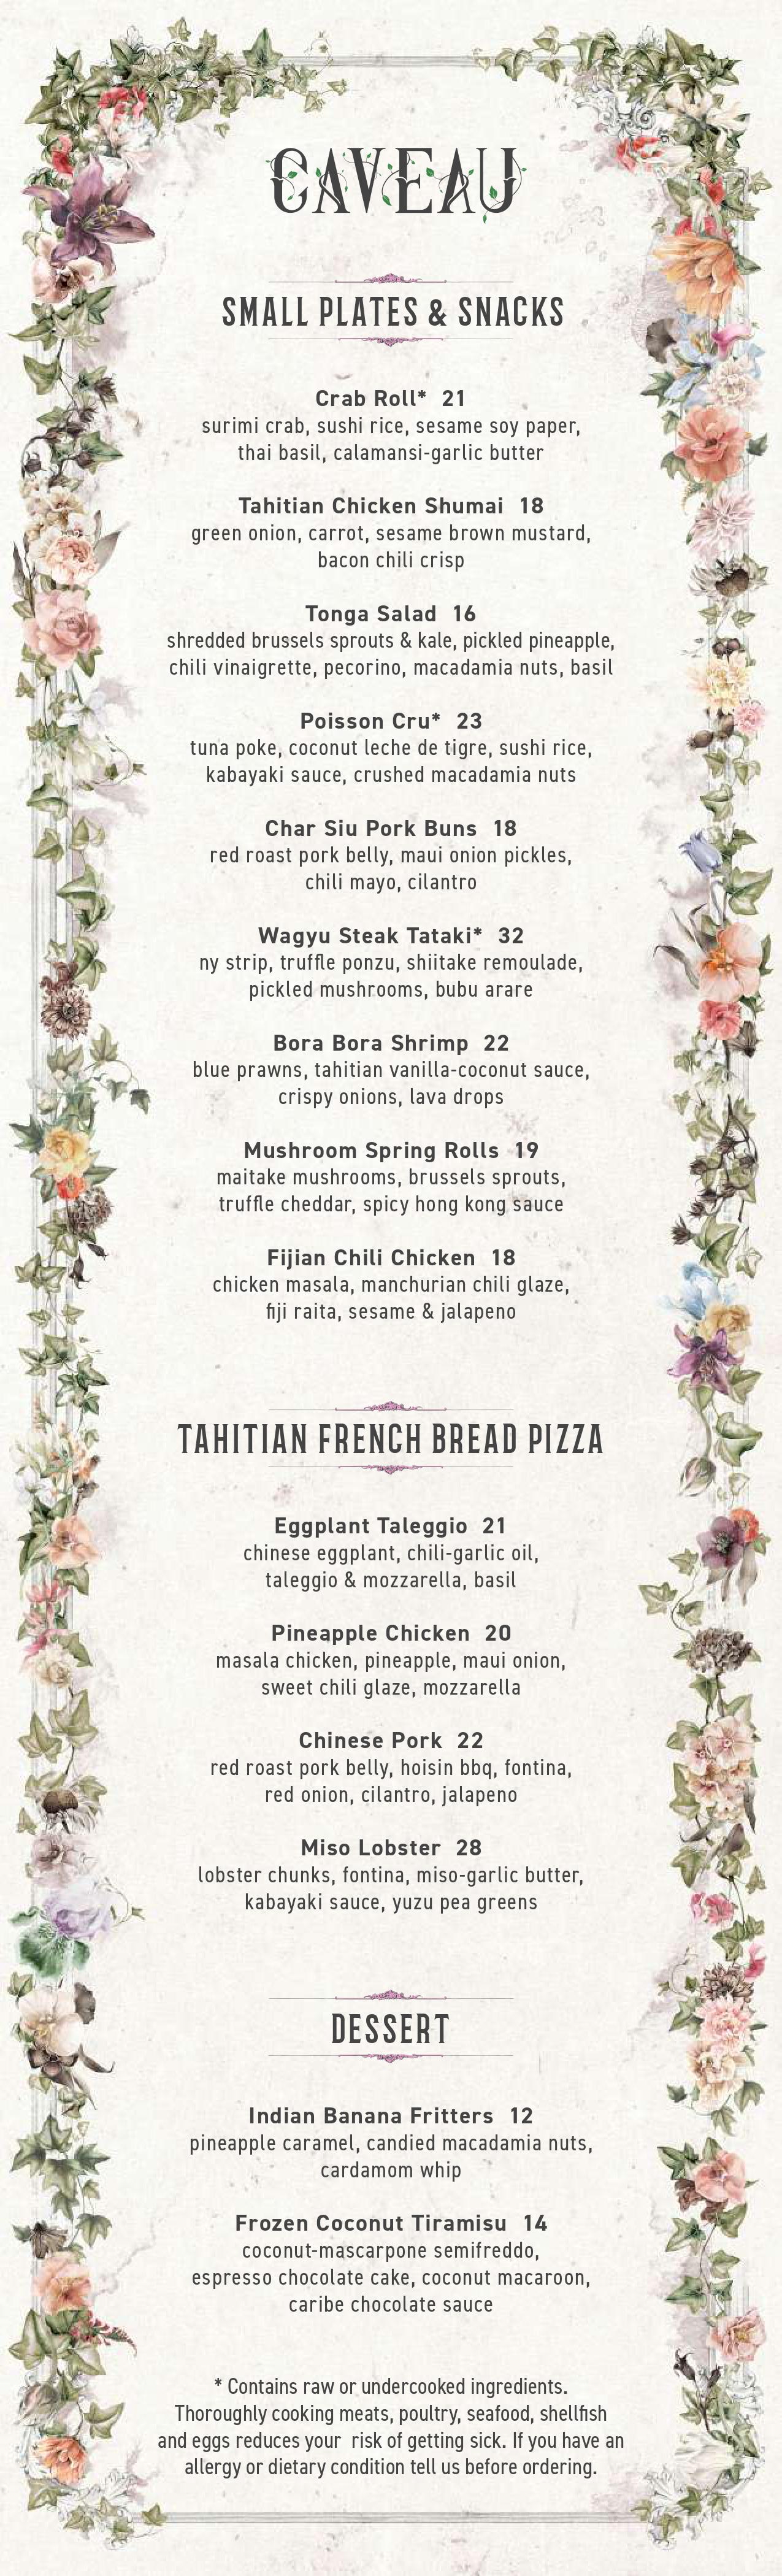 A food menu for a restaurant called Caveau features a floral border.